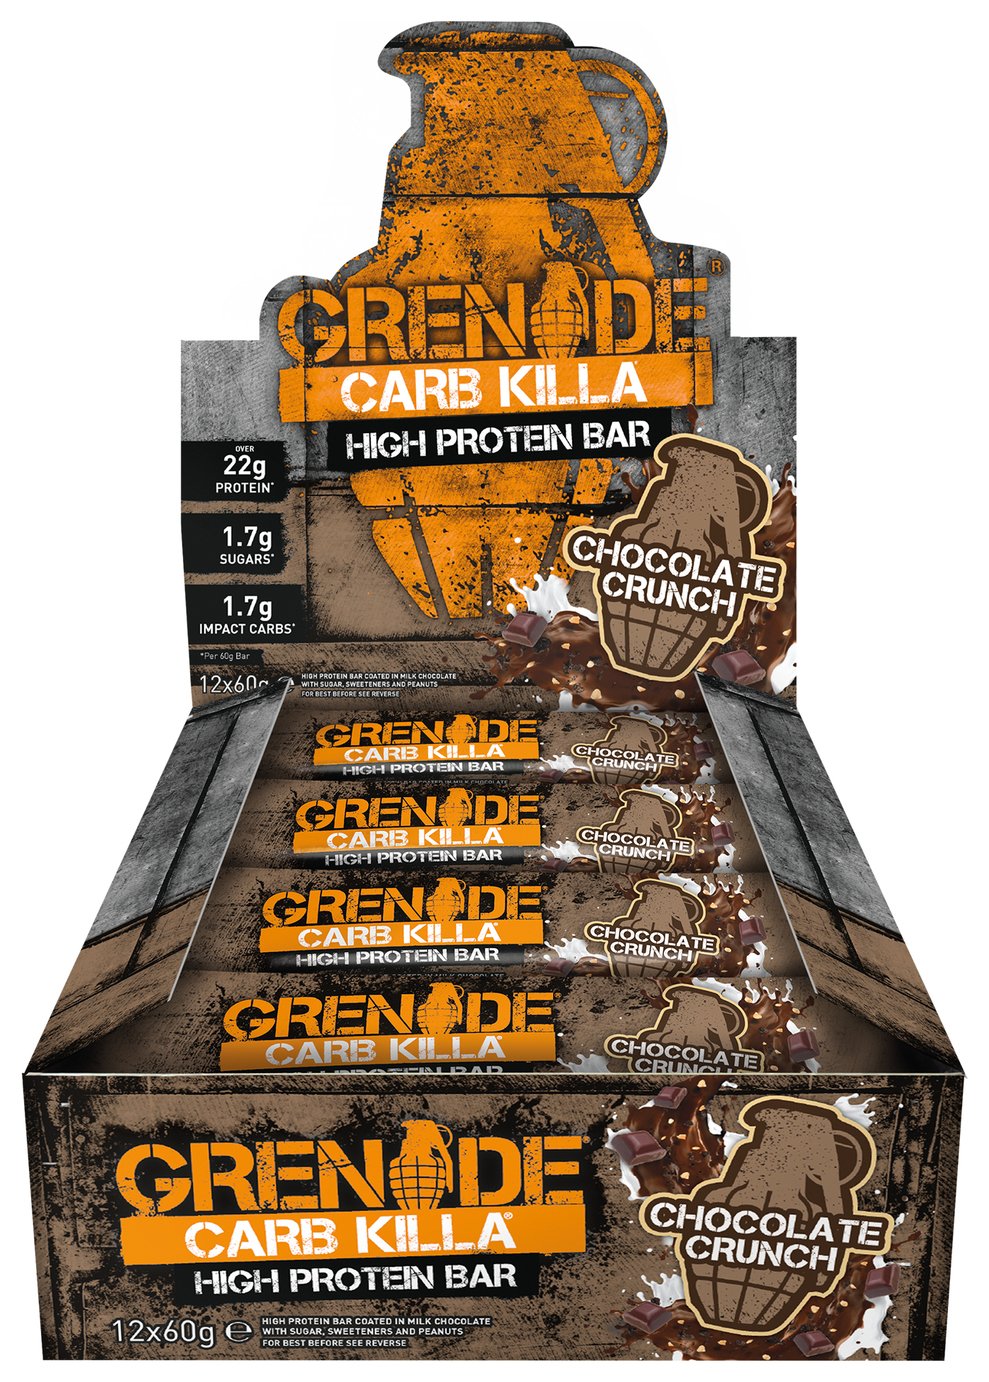 Grenade Carb Killa Protein Bars - Chocolate Crunch